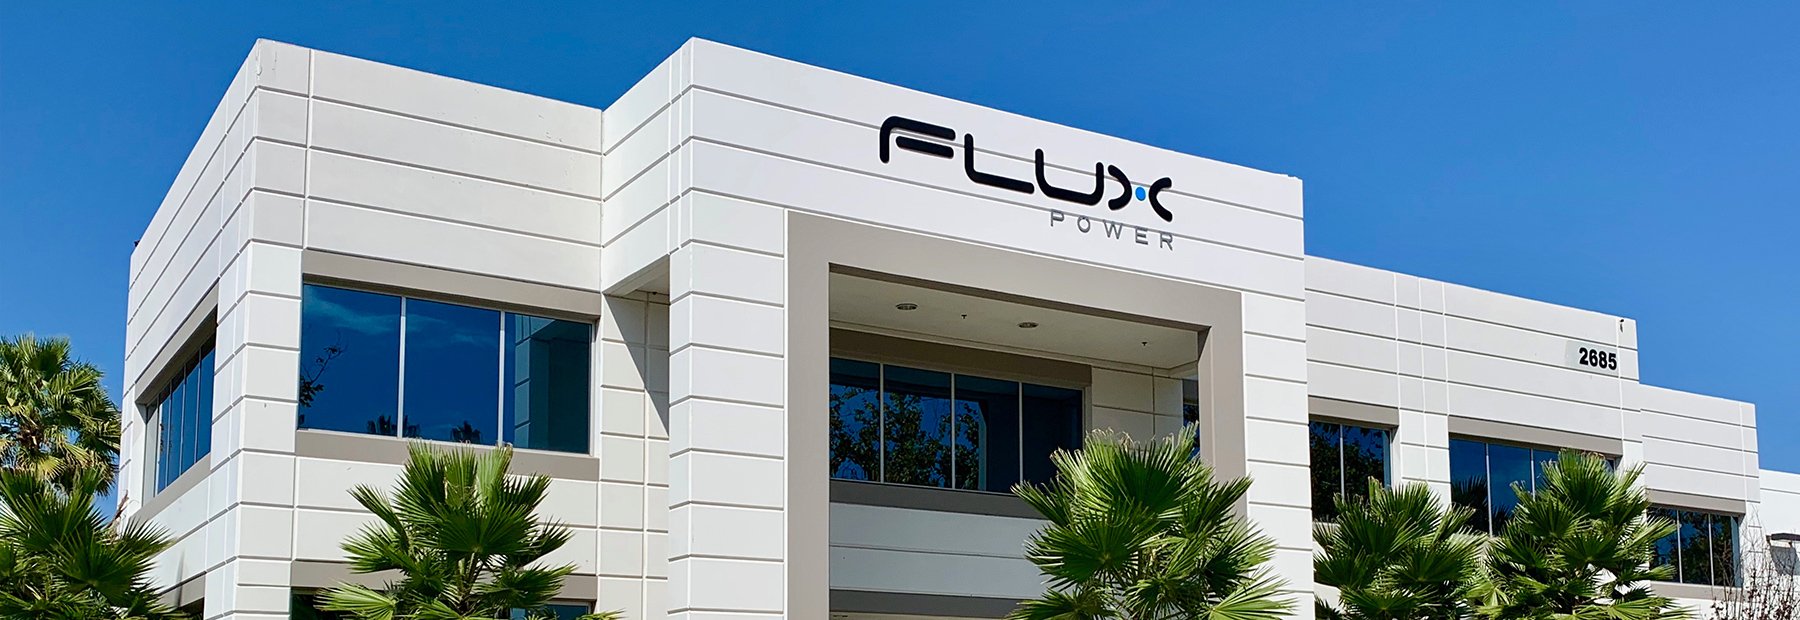 Flux-Power-New-Building-front